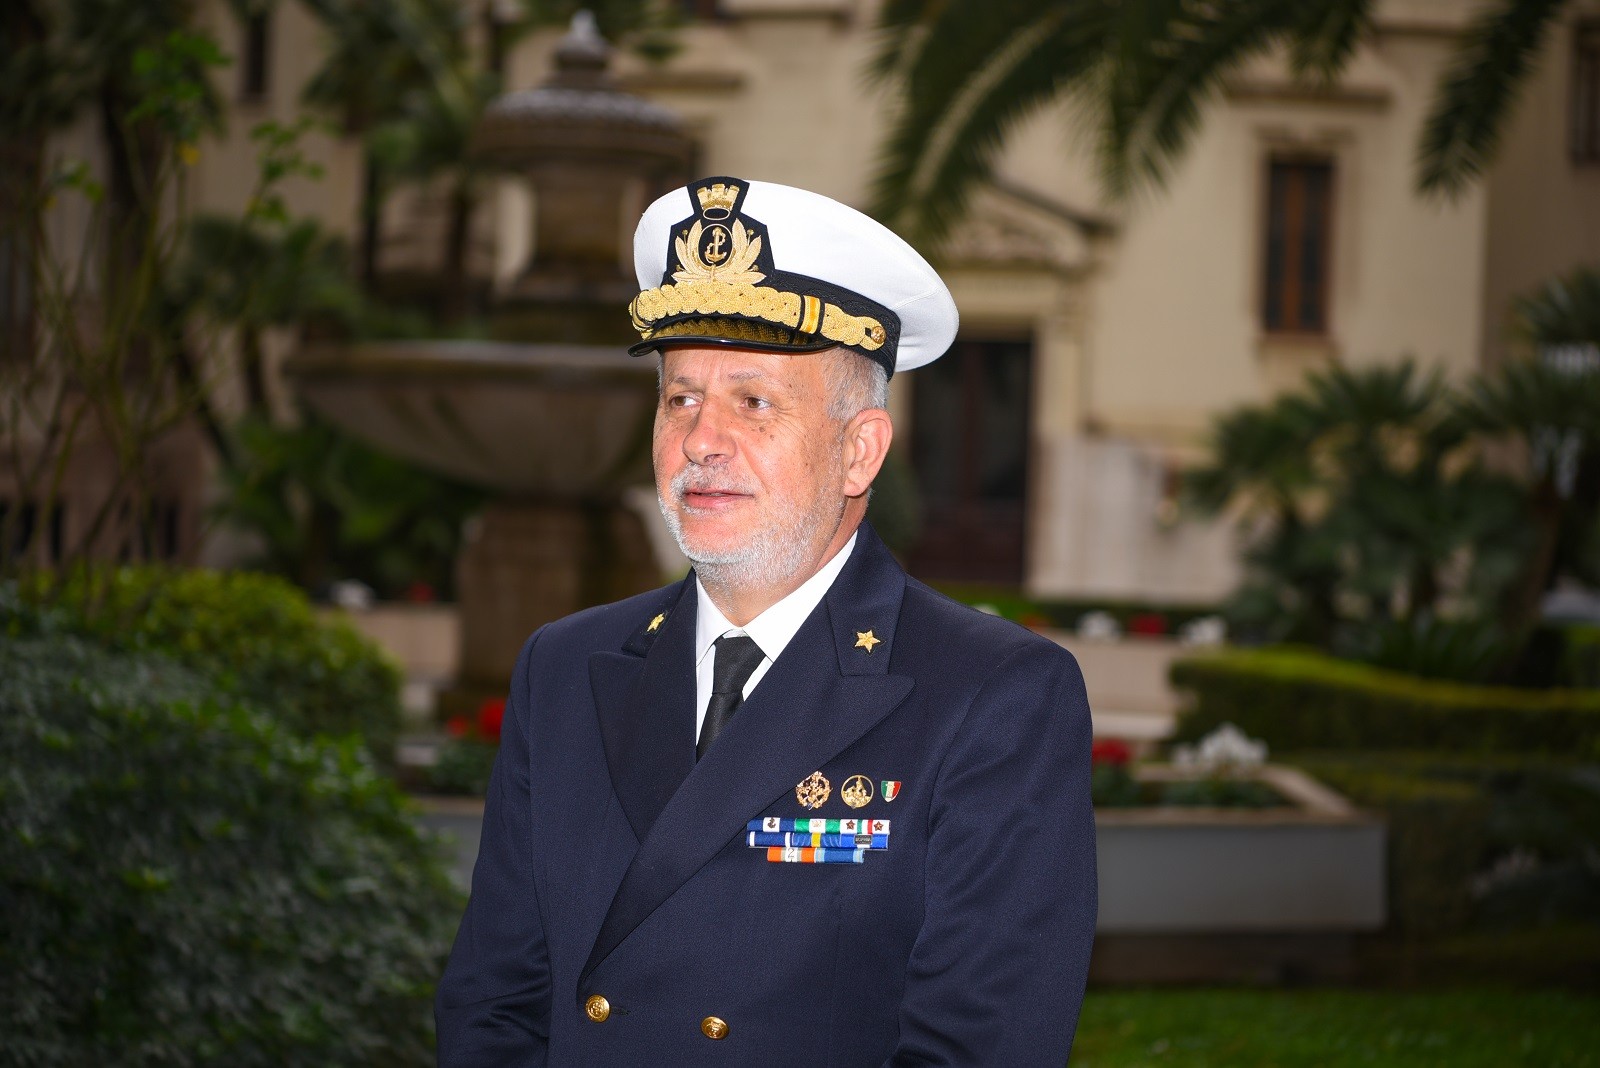 Ammiraglio de Renzis Sonnino